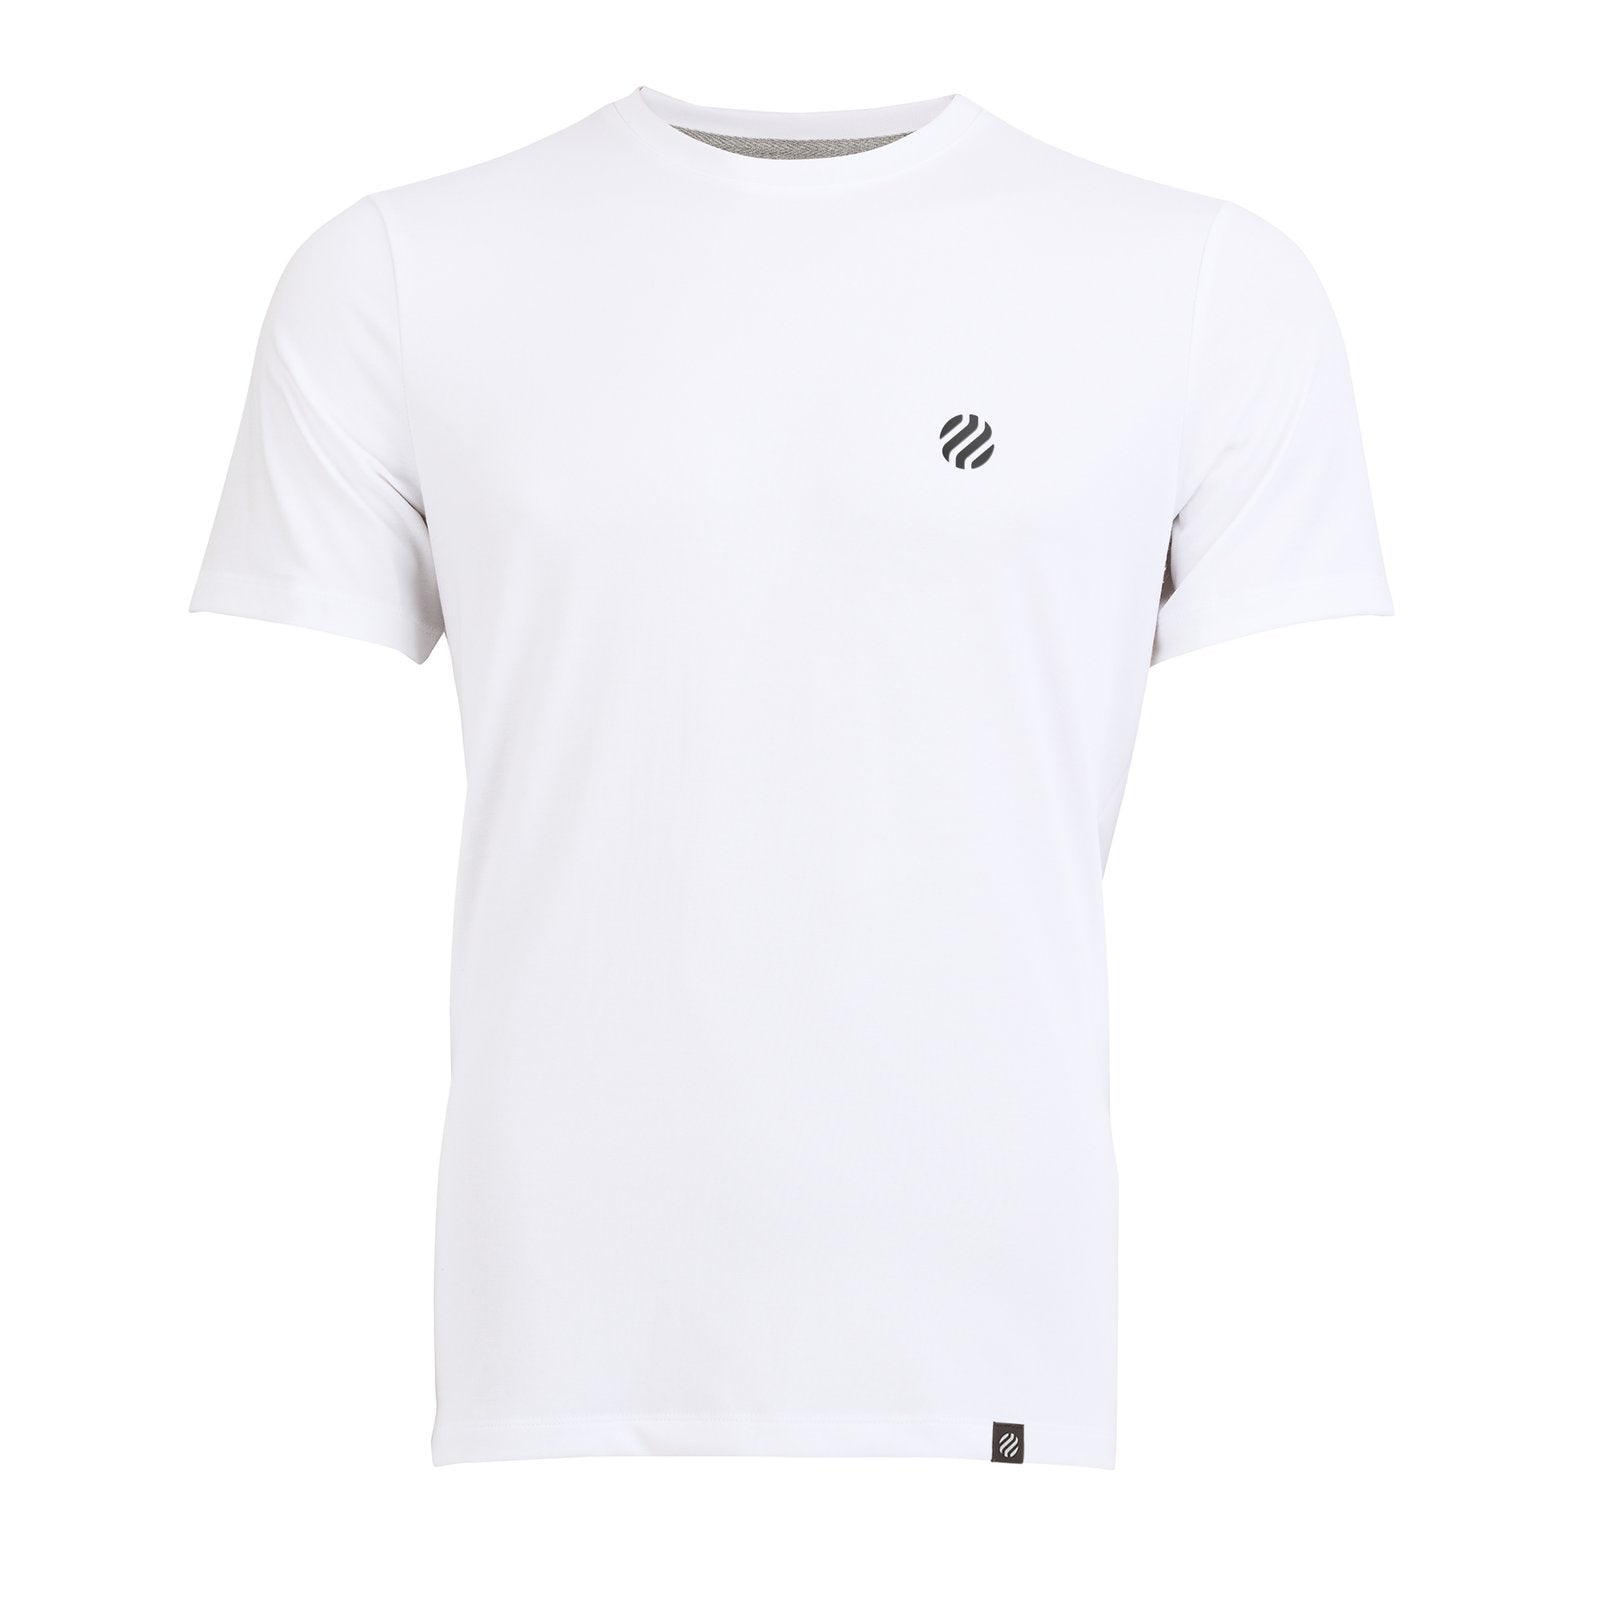 COOLEVER T-shirt reflective Logo Ball, white